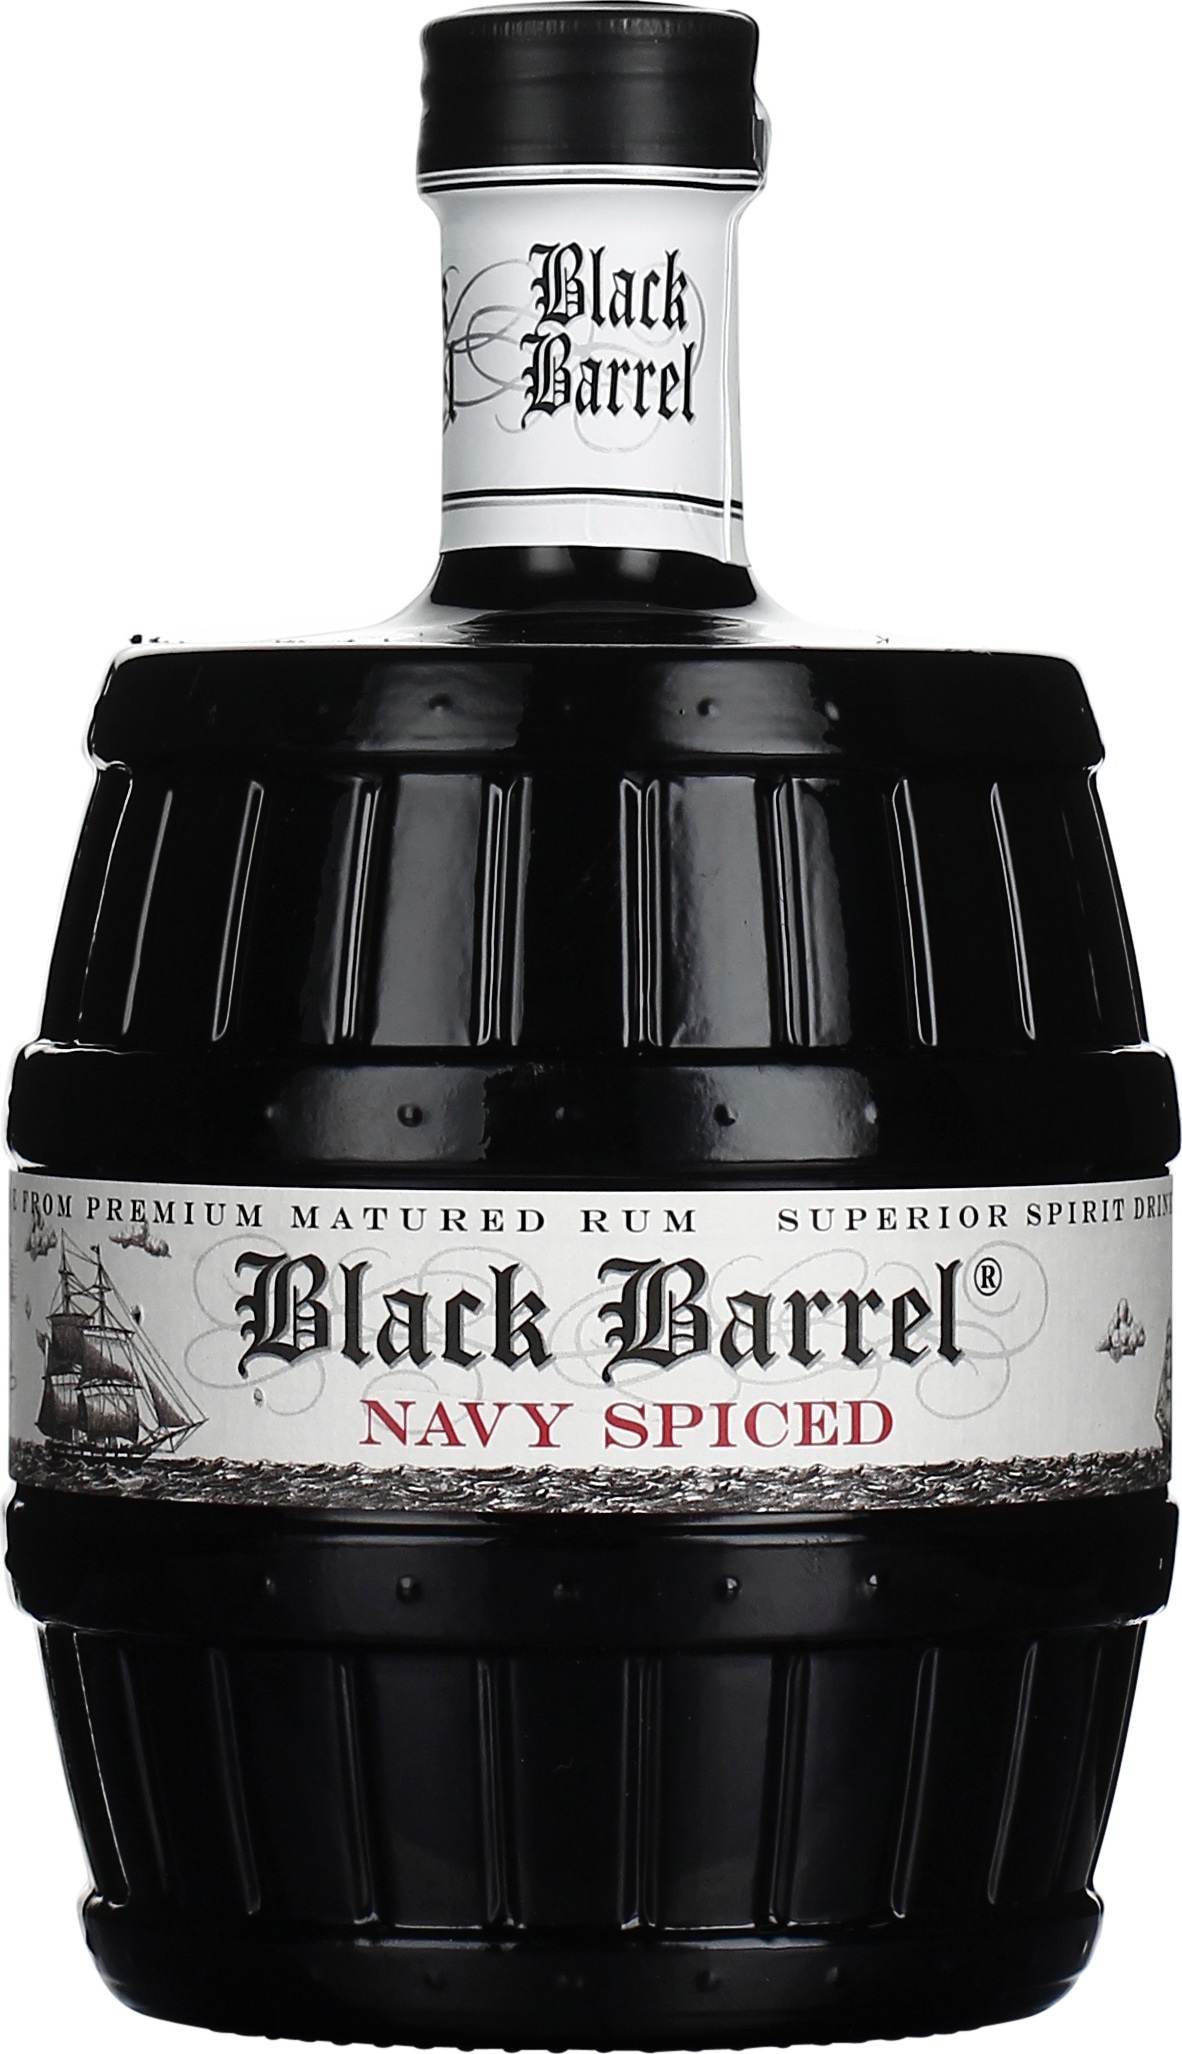 Drankdozijn A.H. Riise Black Barrel Navy Spiced 70CL aanbieding